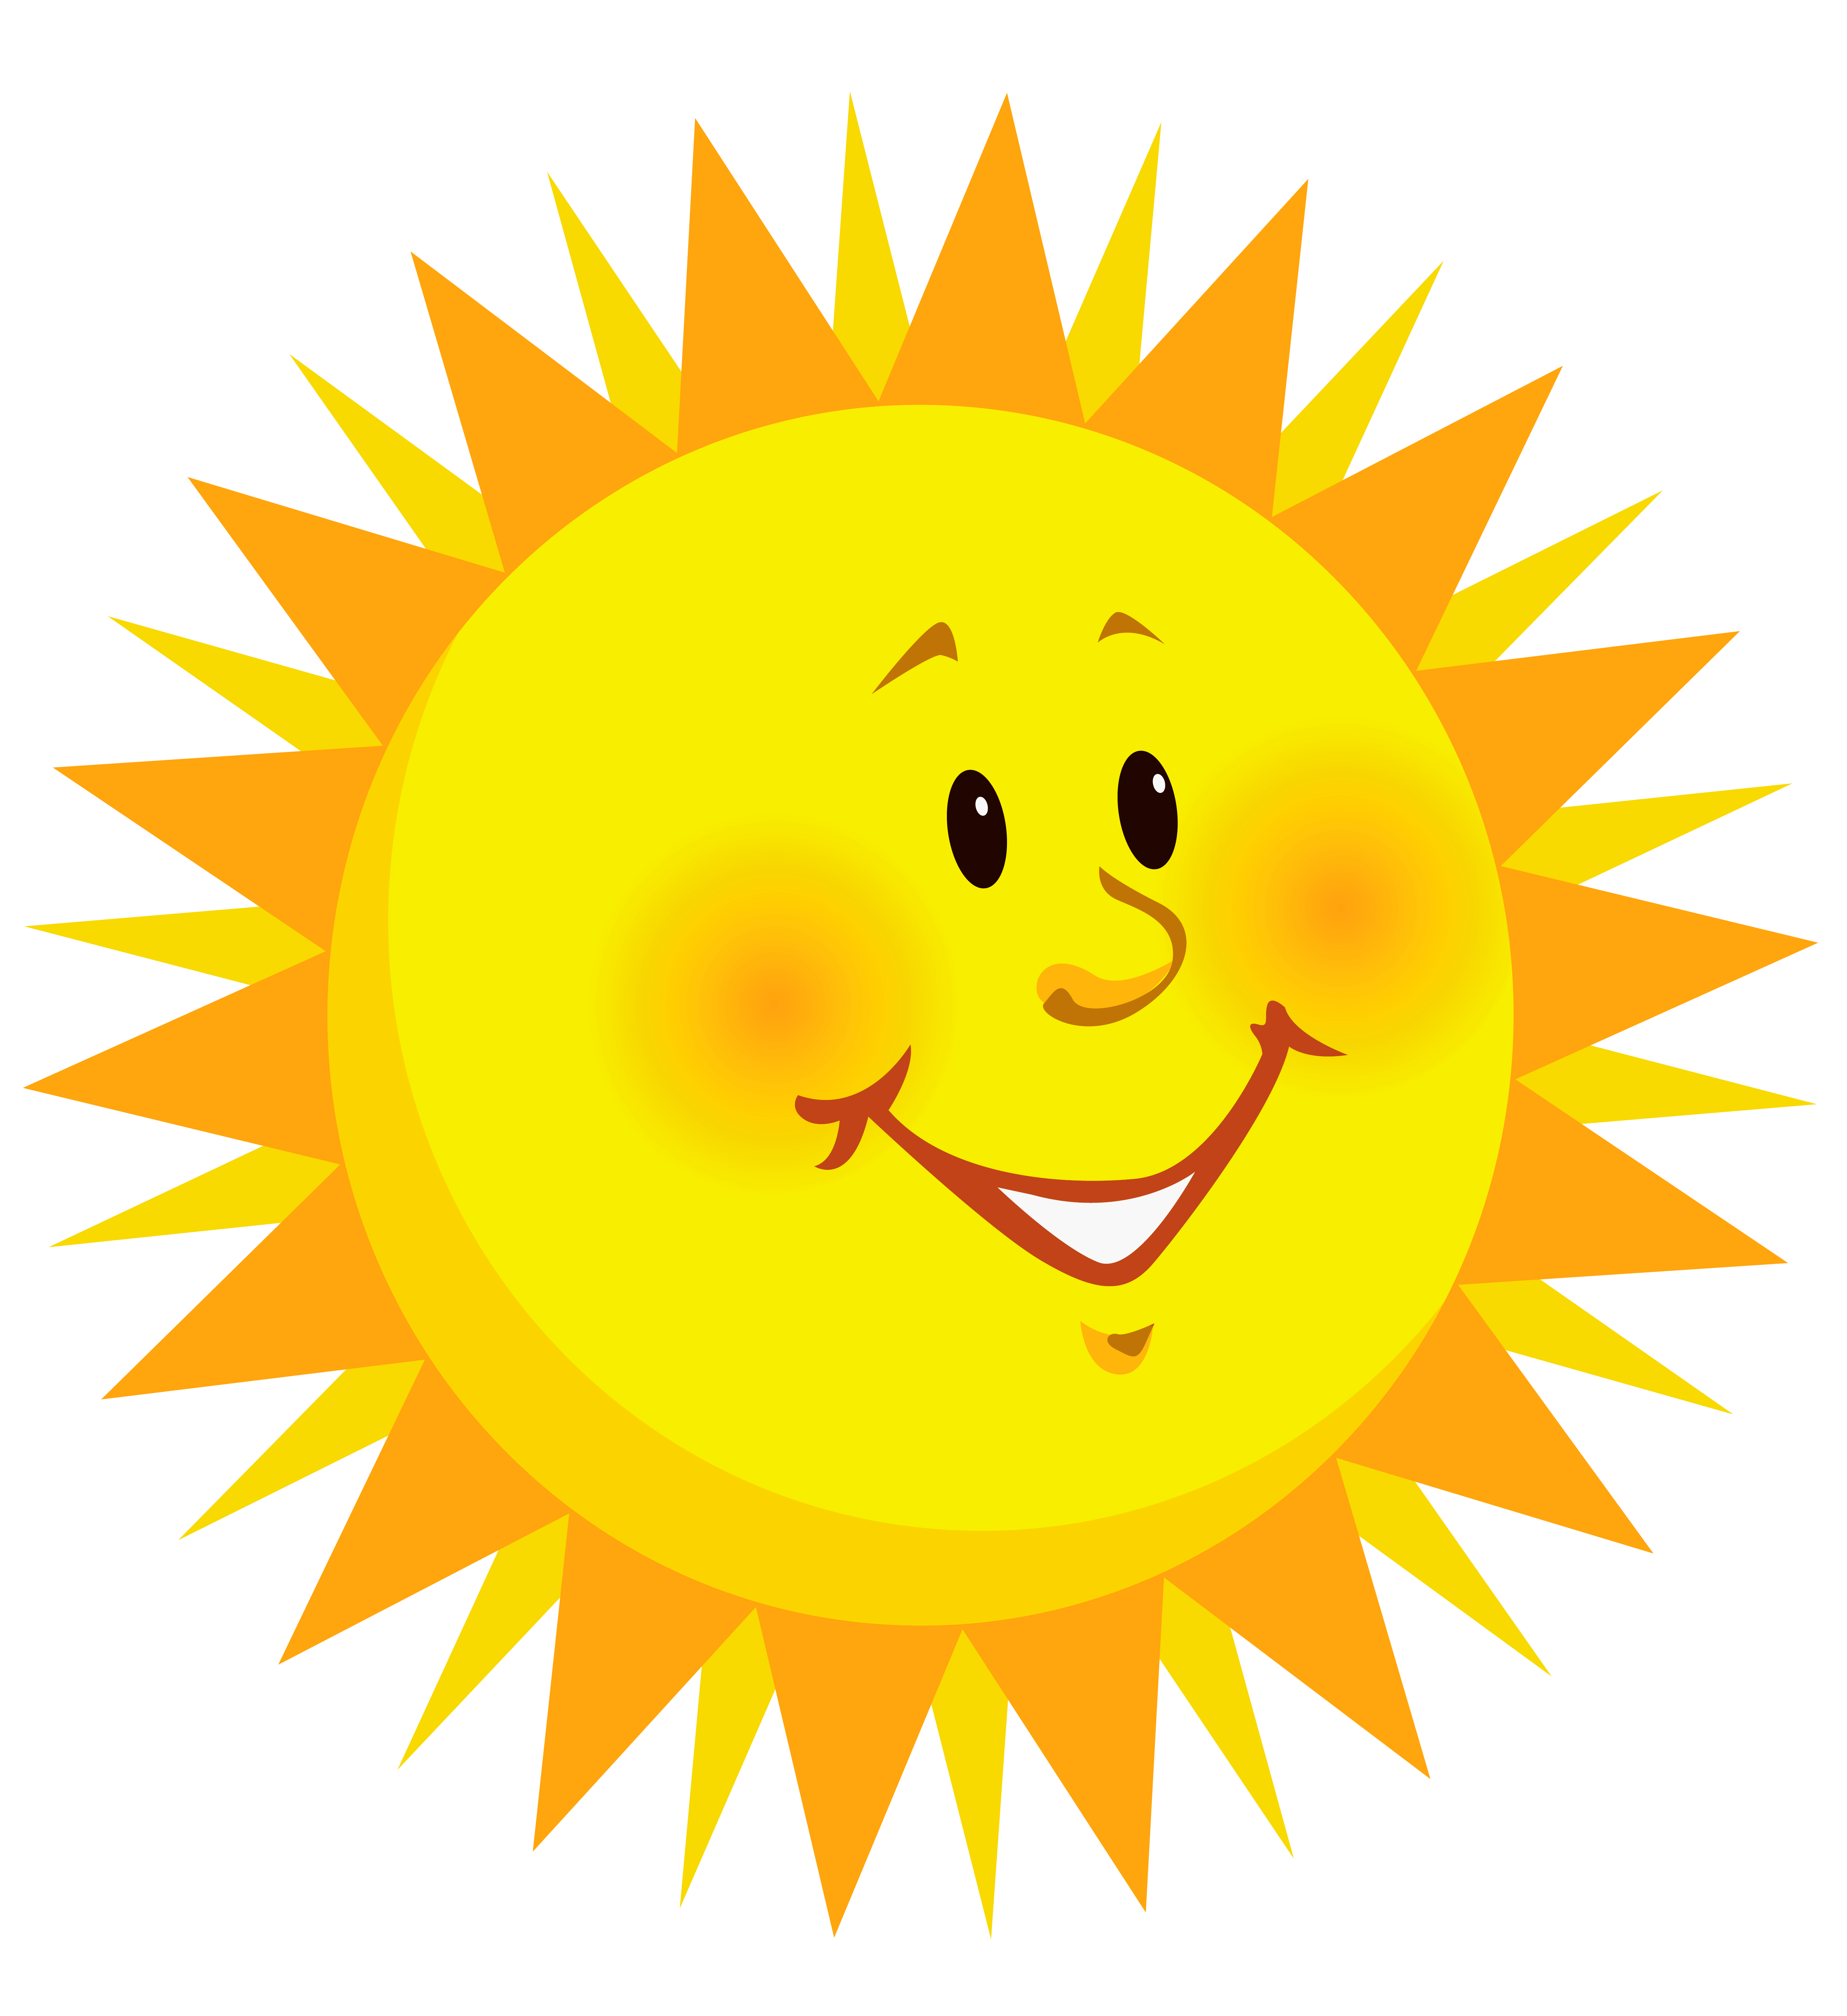 Transparent Smiling Sun PNG Clipart Picture